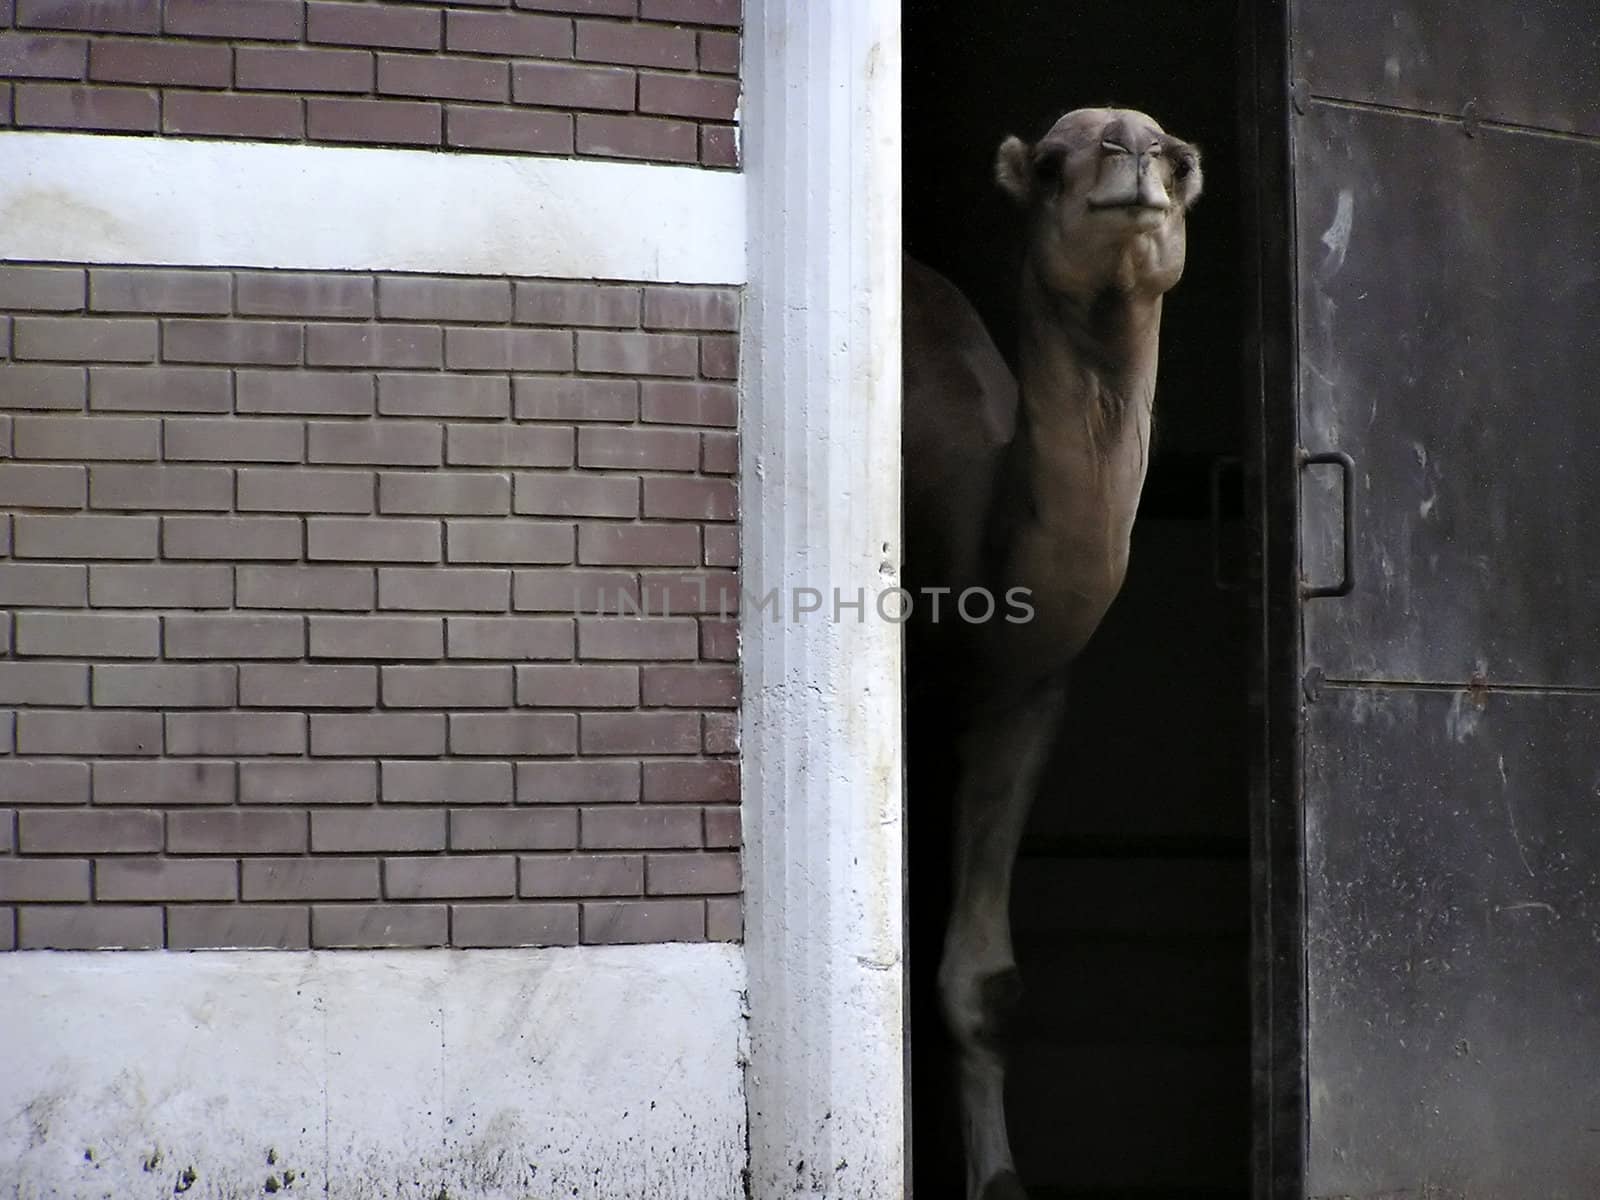 Camel by penta